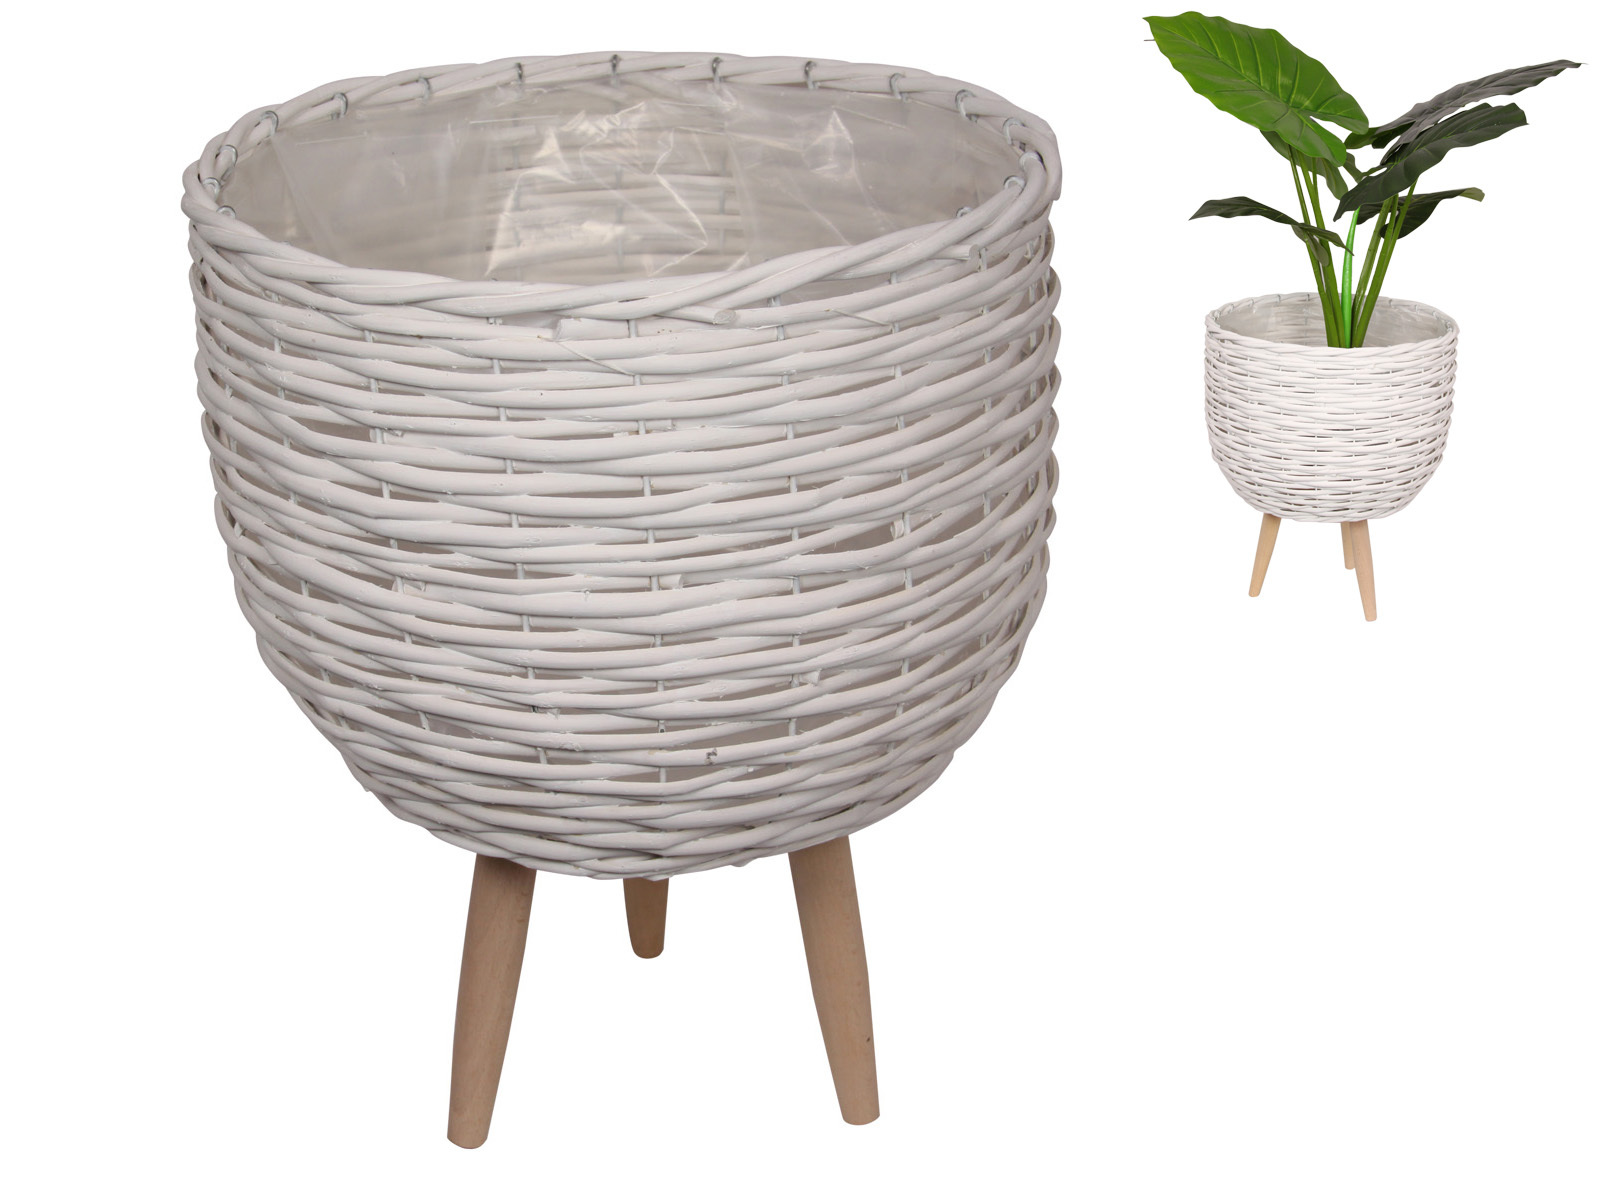 1pce 40cm White Wicker Basket Pot Plant Holder with Legs